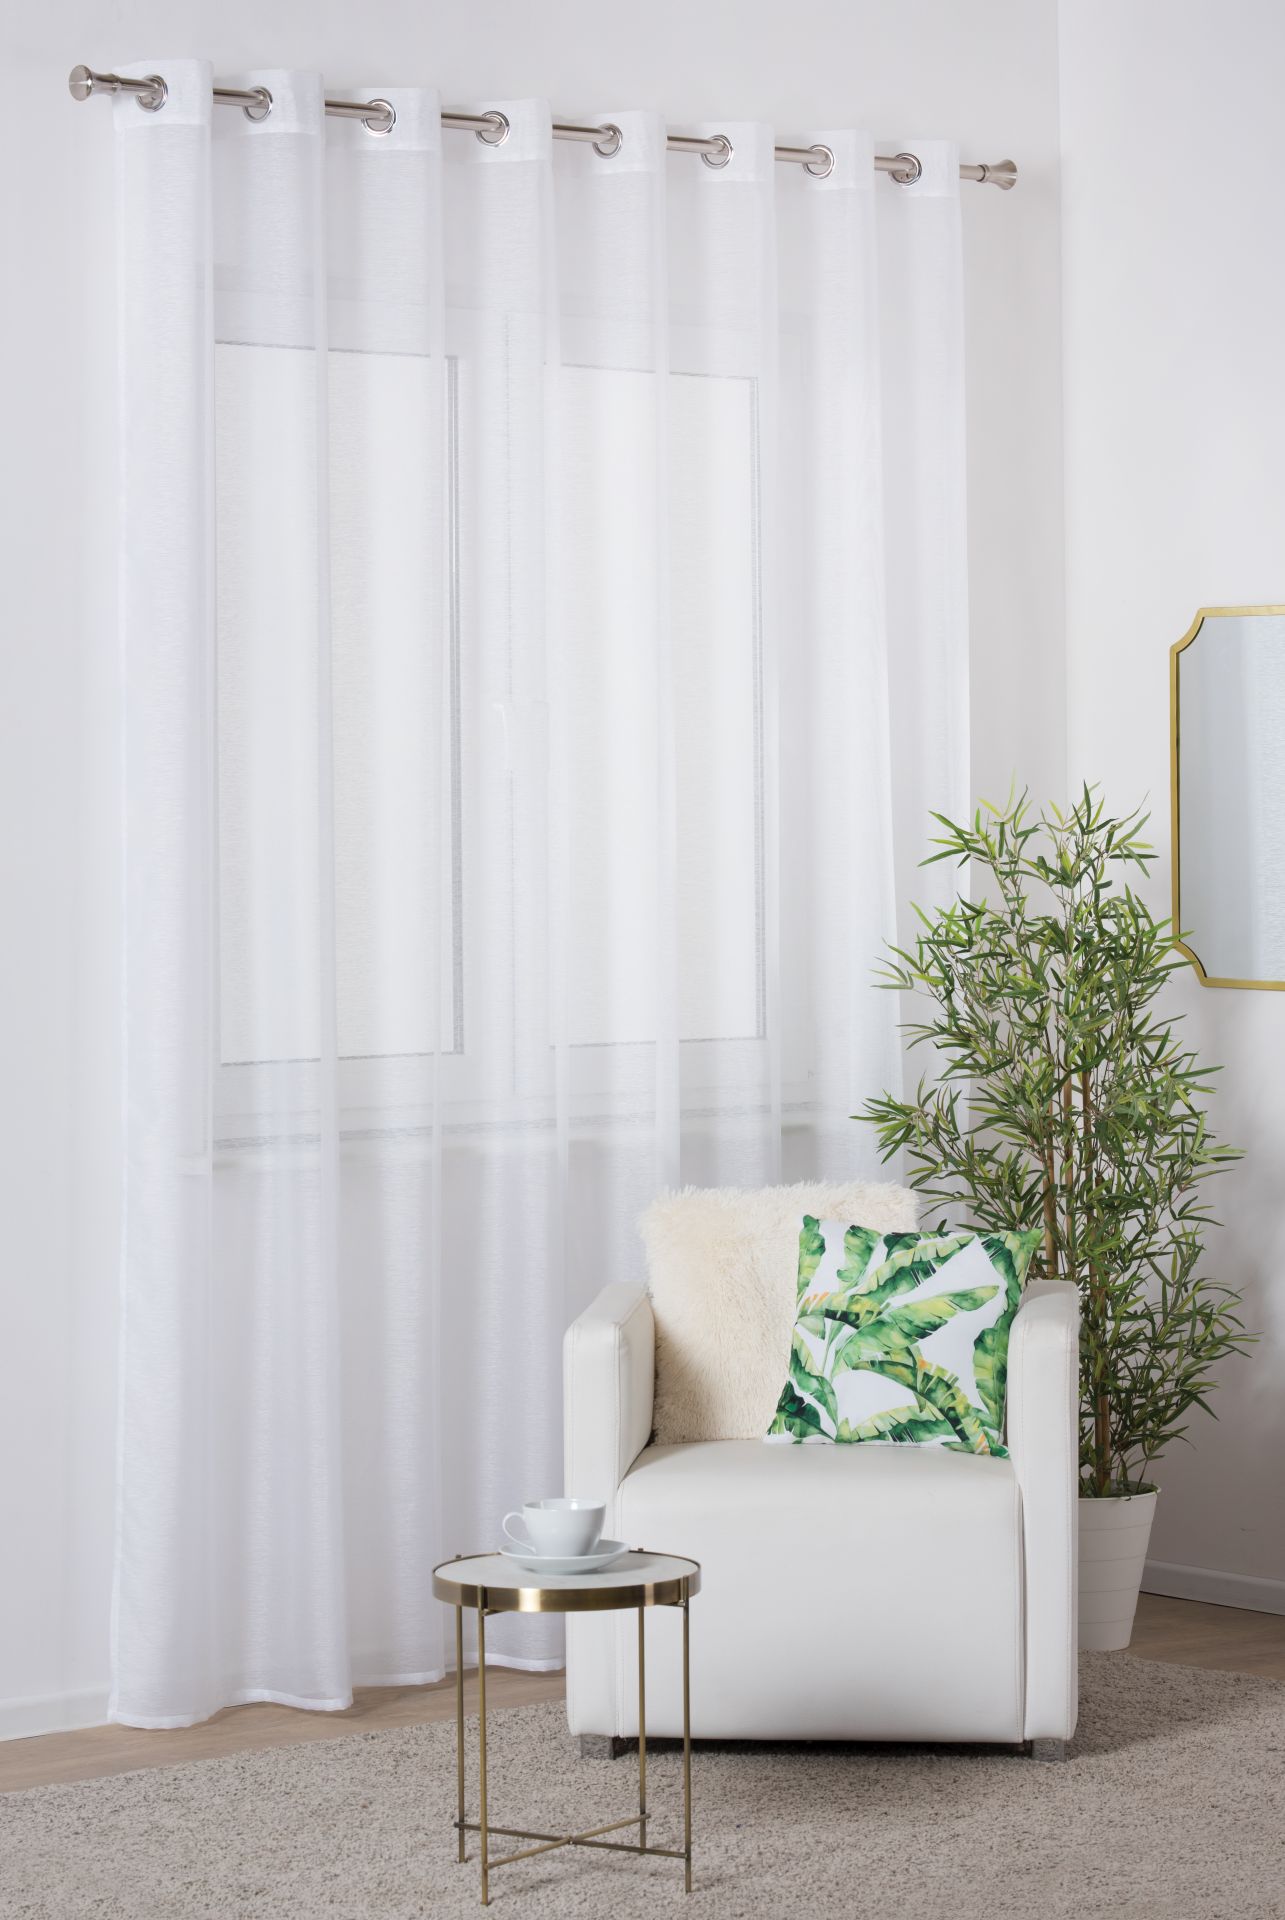 Dekorační záclona SOFIA bílá 290x260 cm (cena za 1 kus) MyBestHome